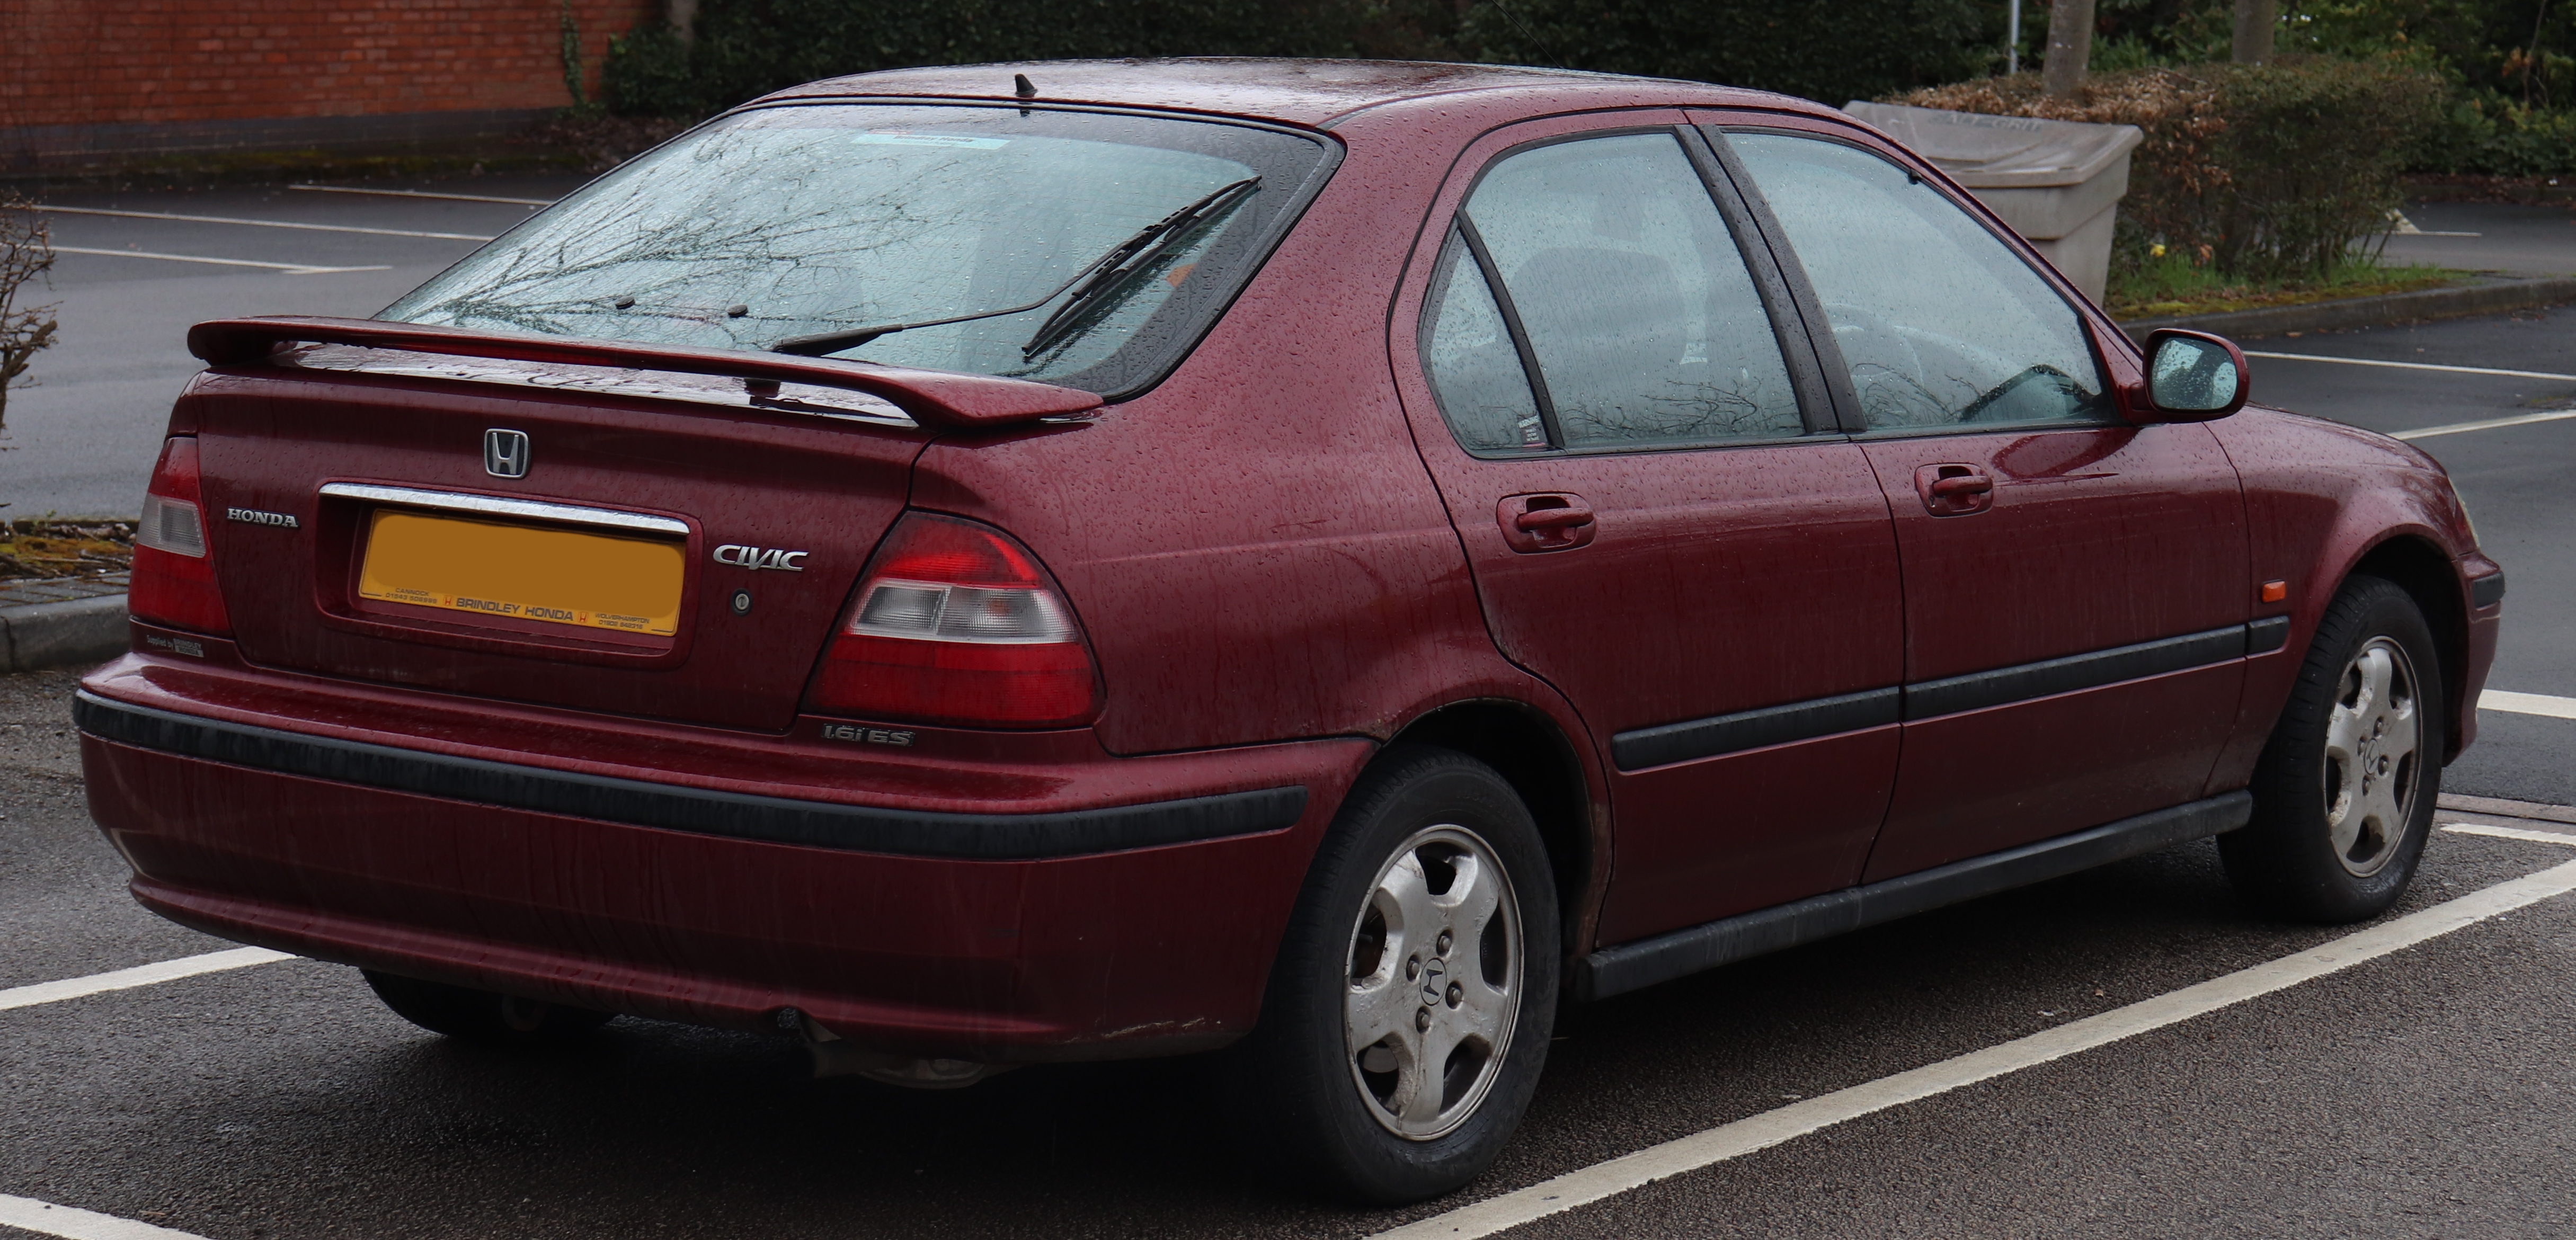 File:1997 Honda Civic ES 1.6 Rear.jpg - Wikimedia Commons